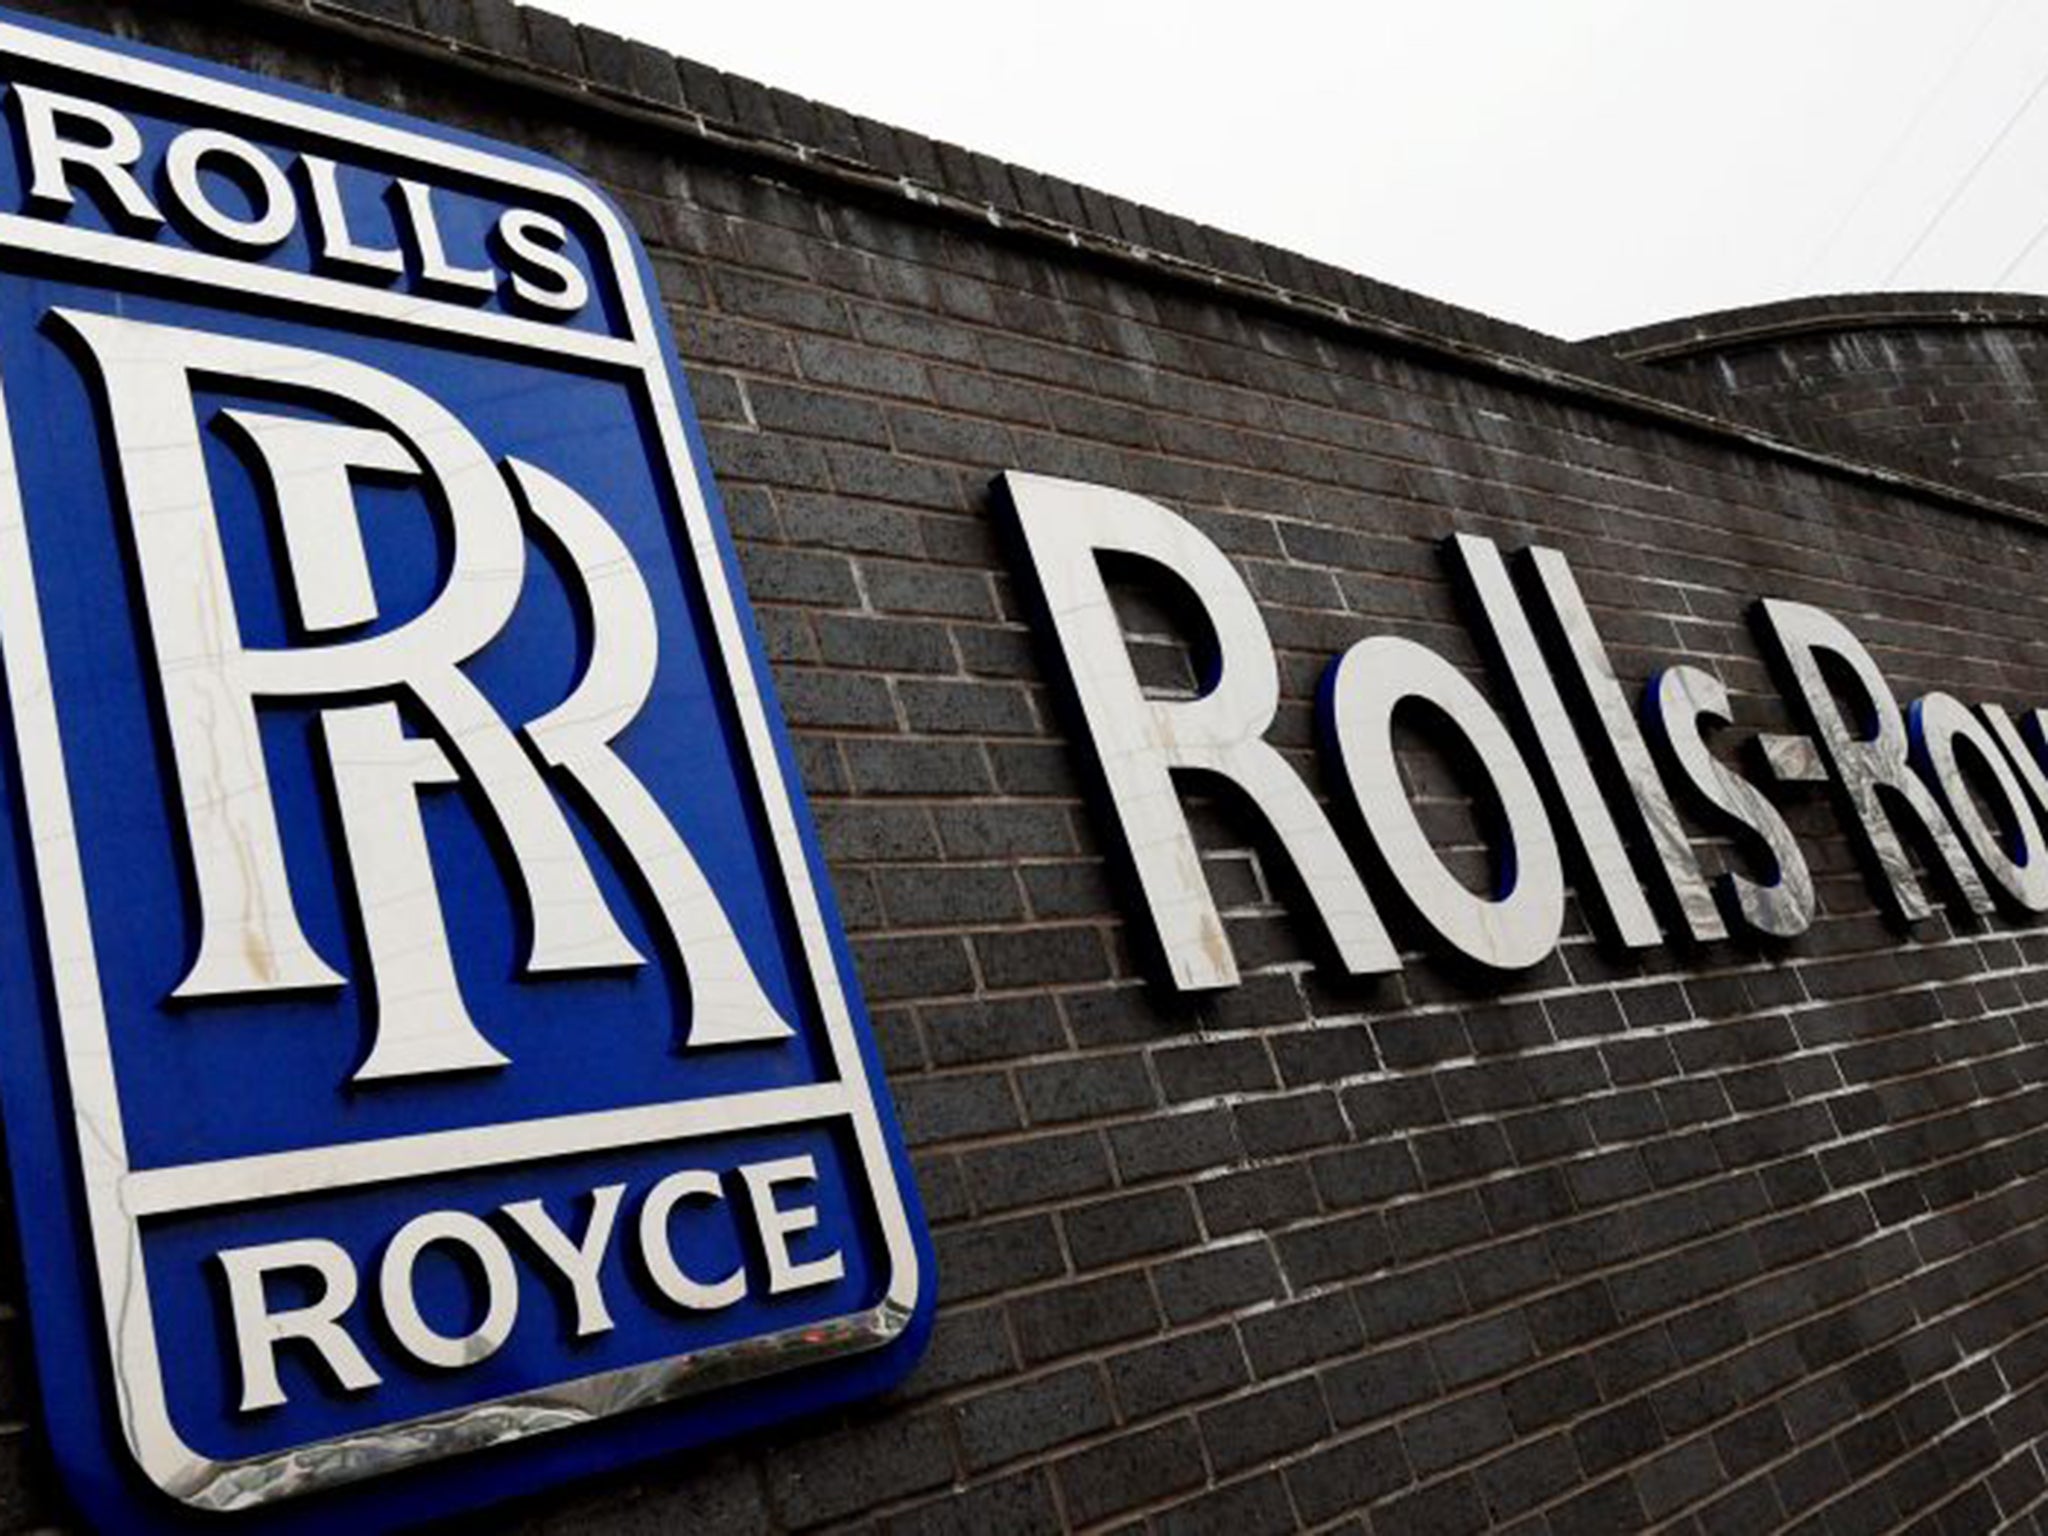 Rolls-Royce was accused of involvement in a multi-billion dollar bribery and kickback scheme at Petrobras